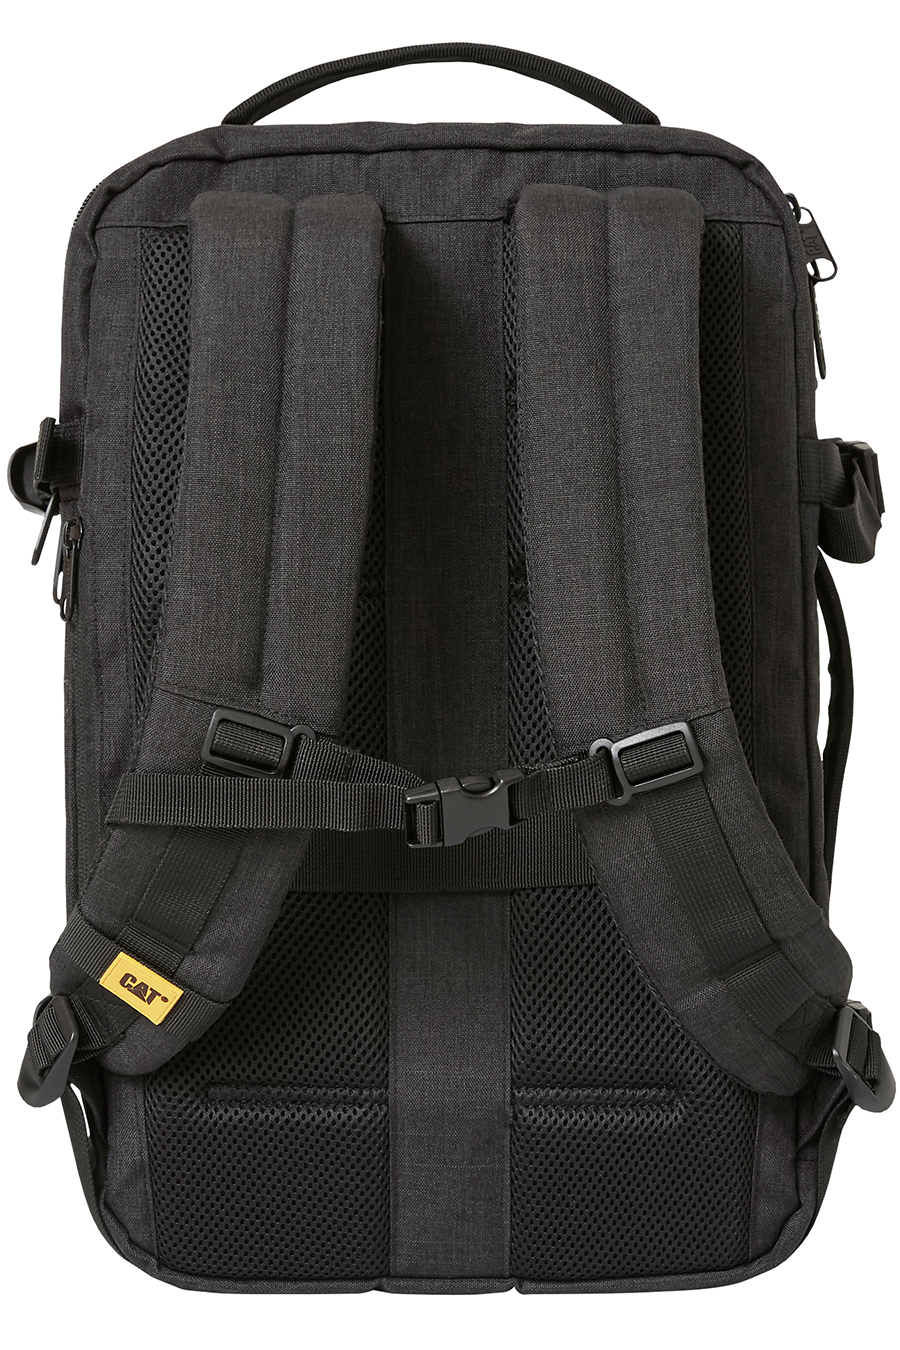 Backpack CAT 84503-500